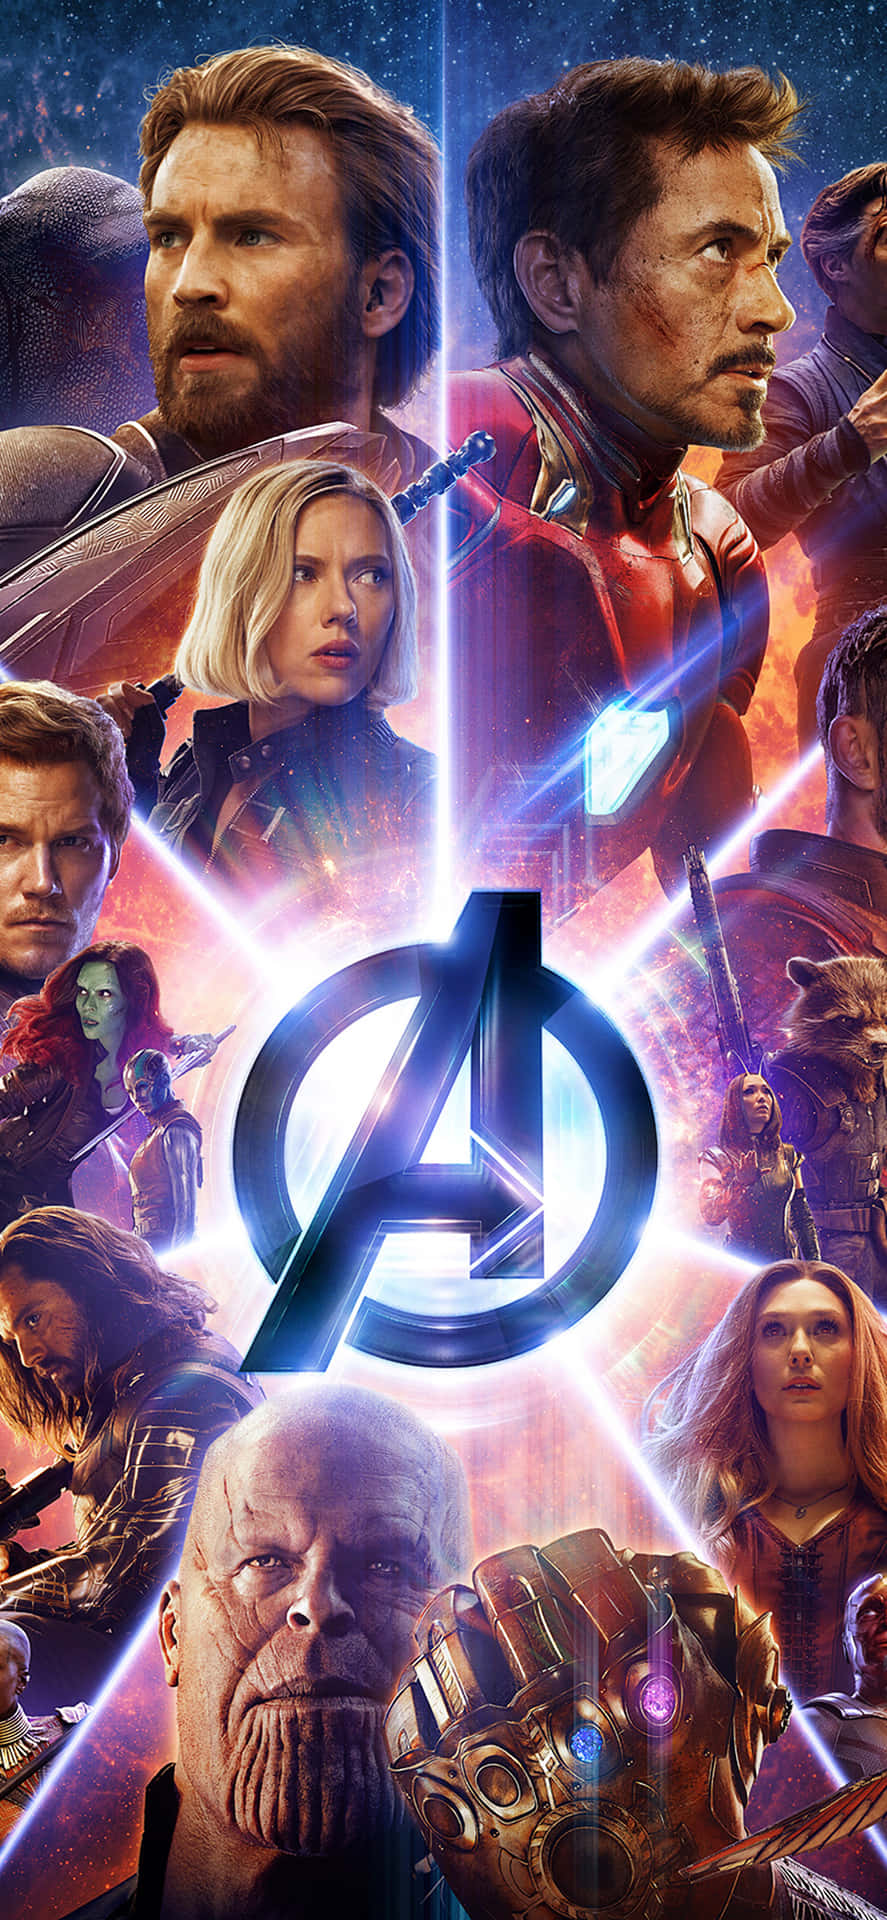 Wallpaper!bekämpa Den Mörka Sidan Med Den Helt Nya Avengers Iphone-bakgrundsbilden! Wallpaper